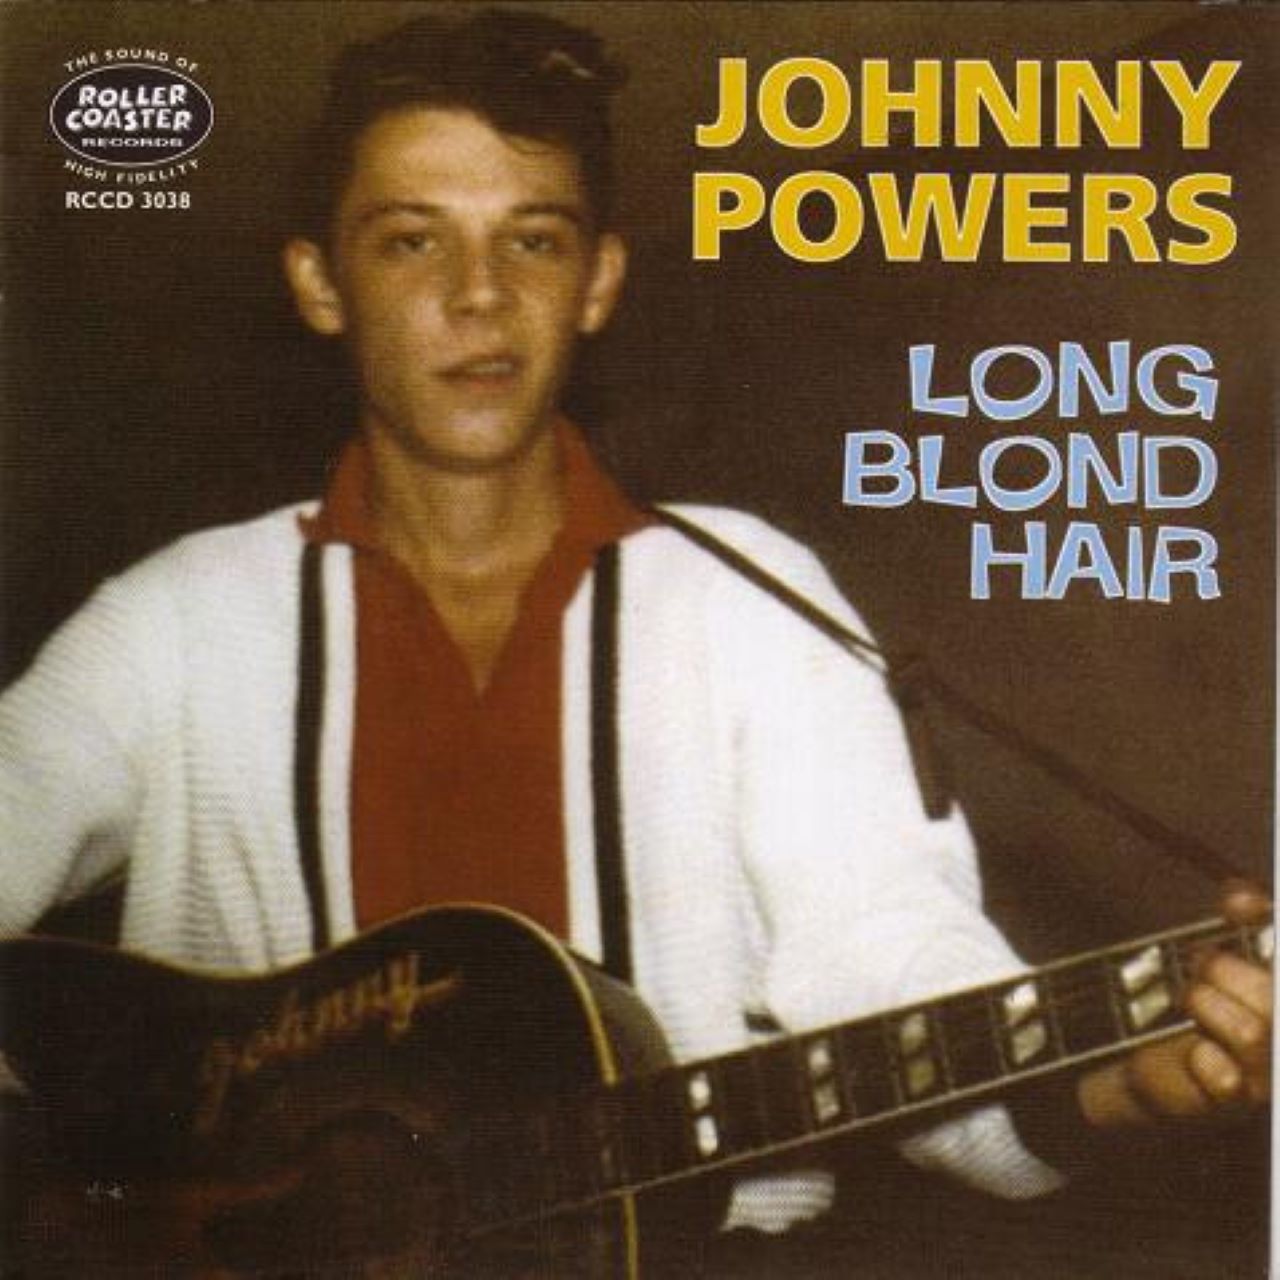 Johnny Powers - Long Blond Hair cover album